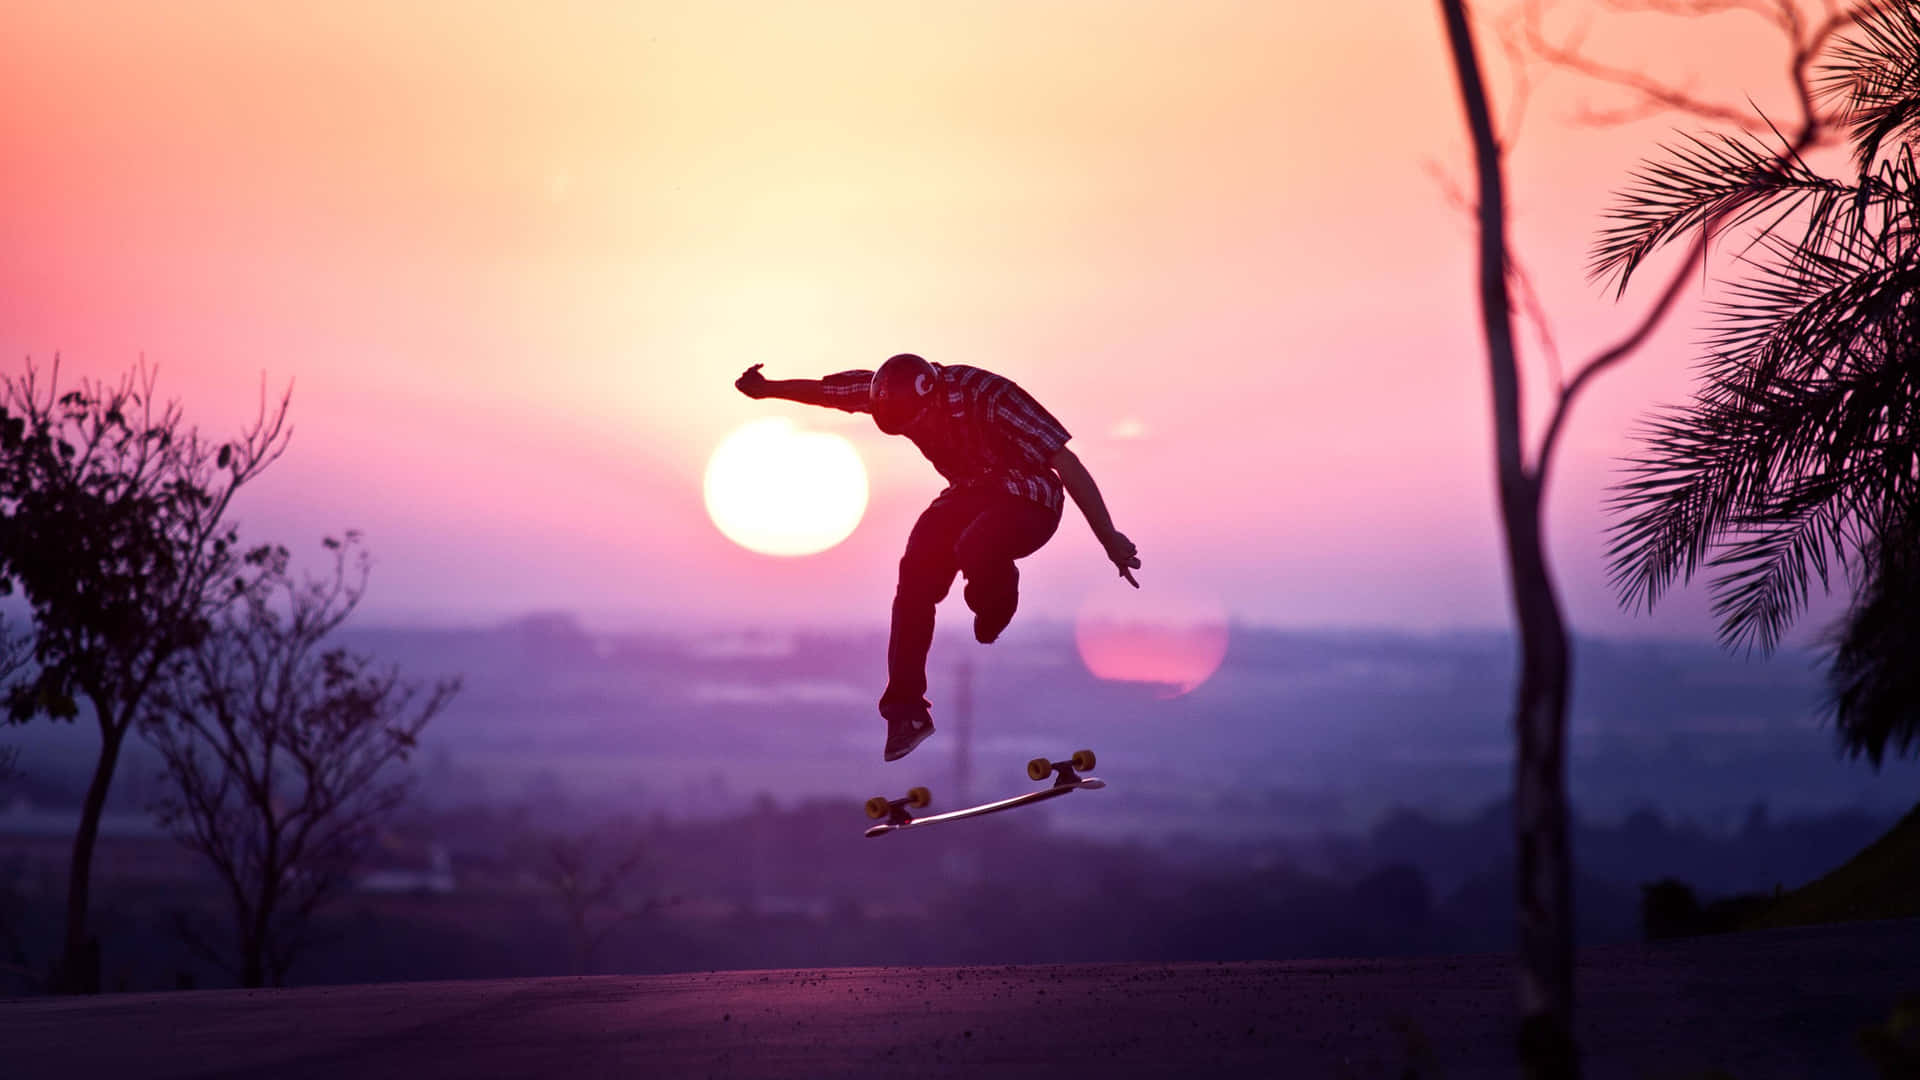 Skateboarder soaring through a graffiti-filled urban ramp